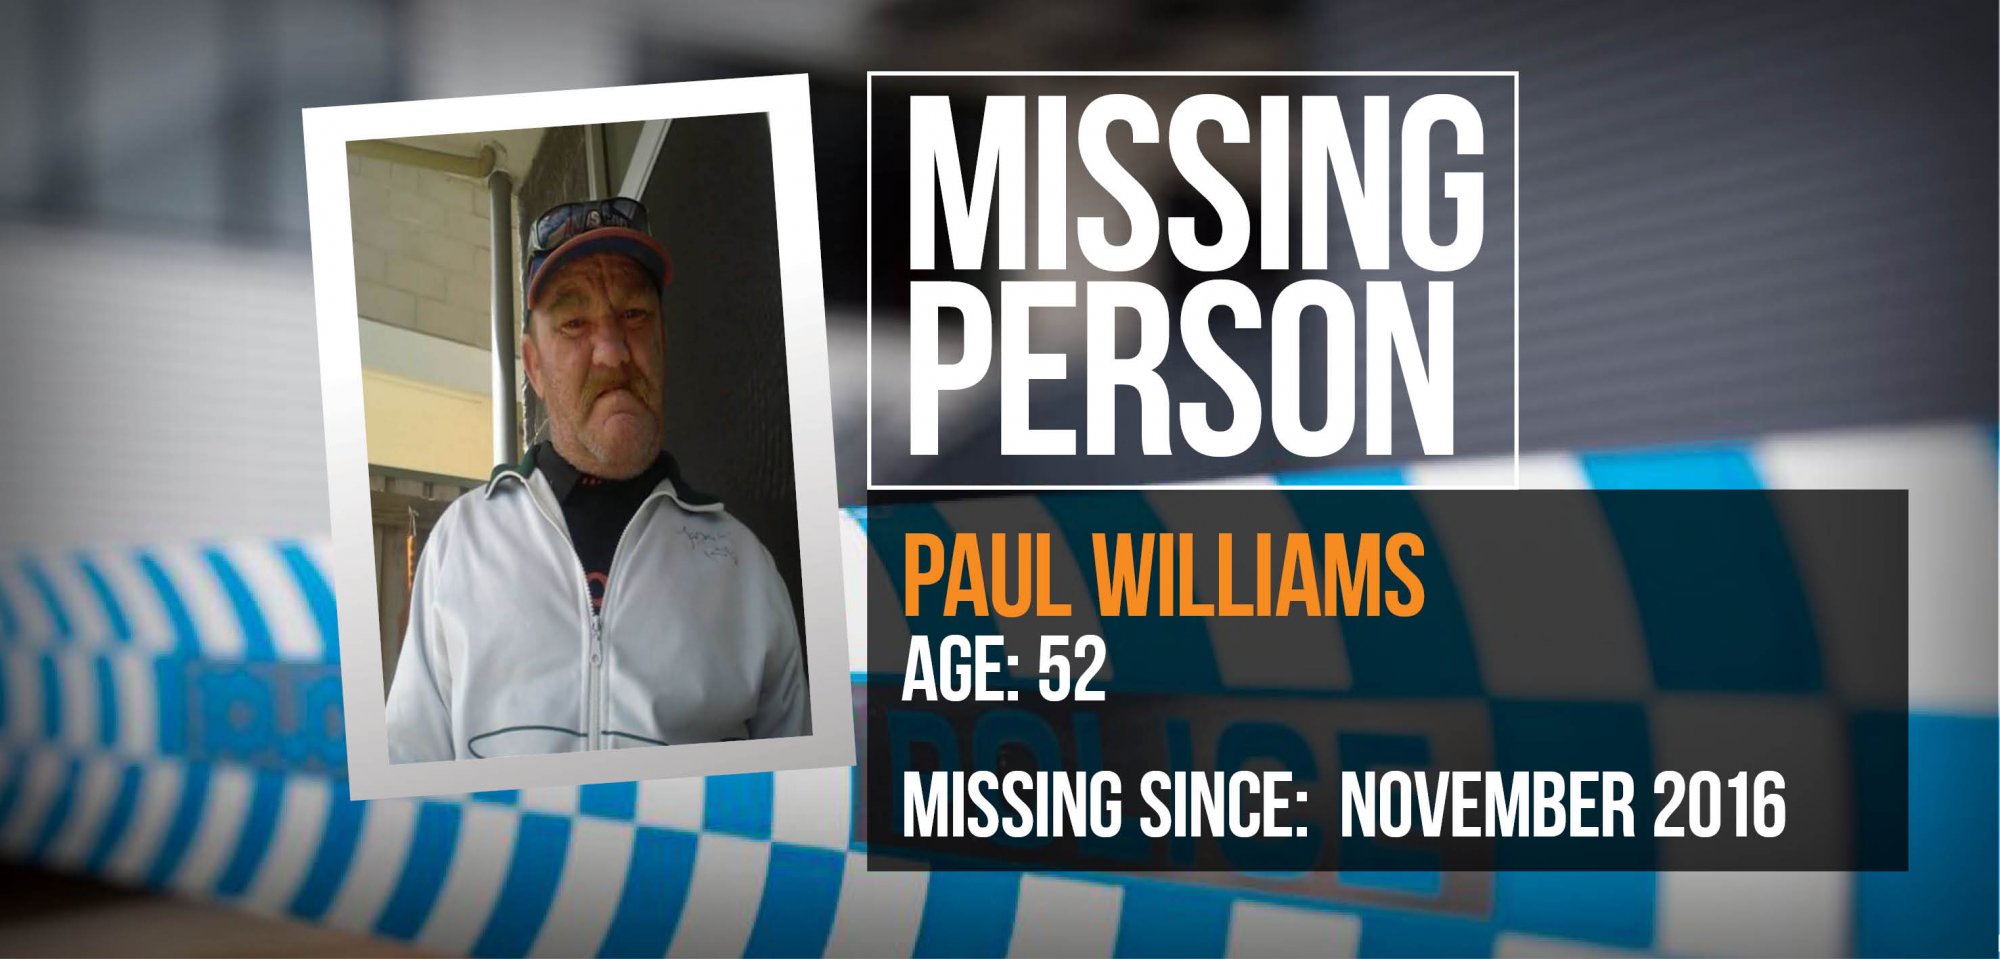 Police seek help to locate Paul Williams, 52, missing since November